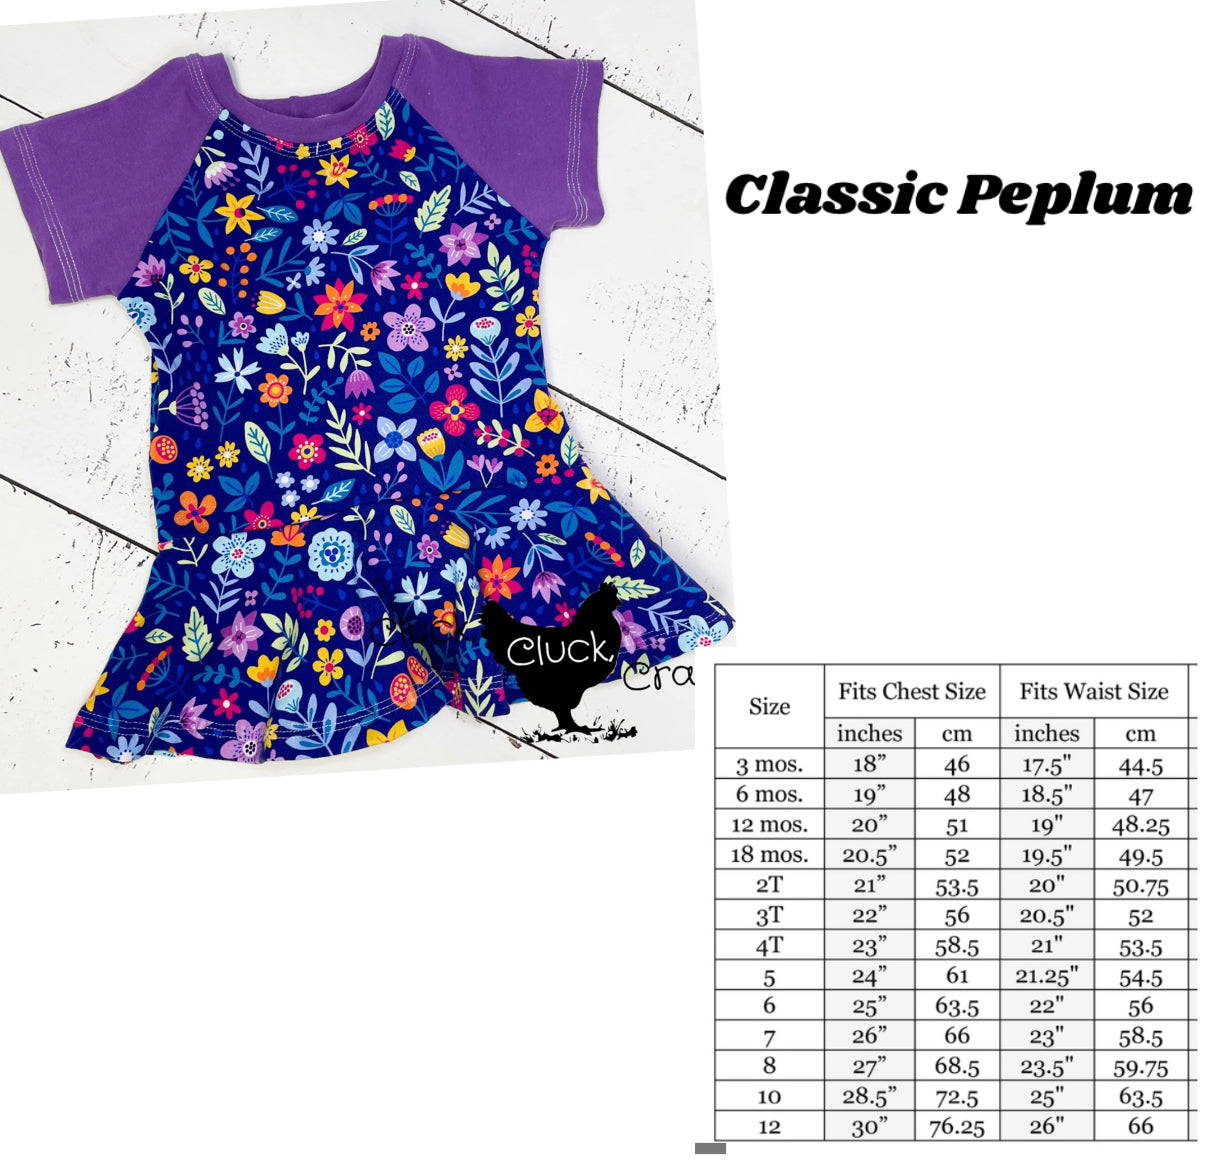 Classic Peplum, Loads of Love